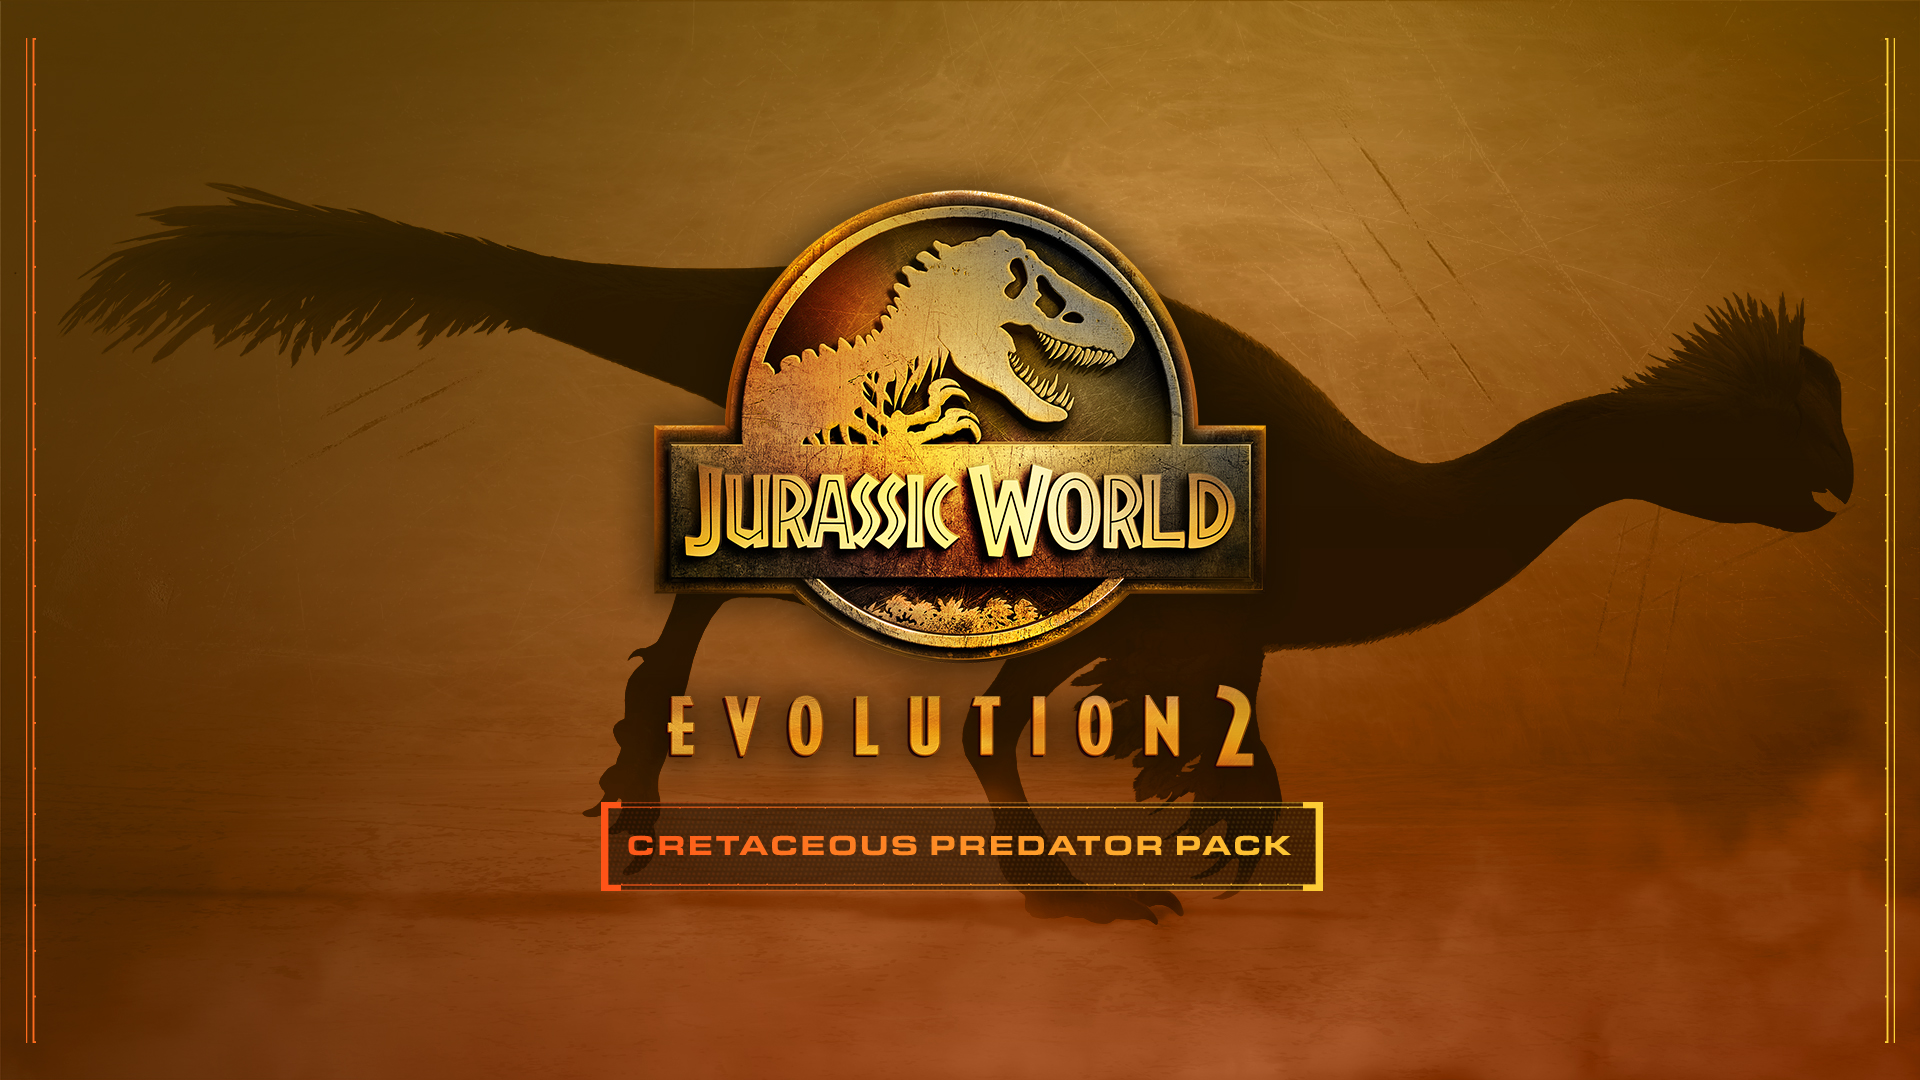 How Jurassic World Evolution 2 Brings Four Cretaceous Predators To Life